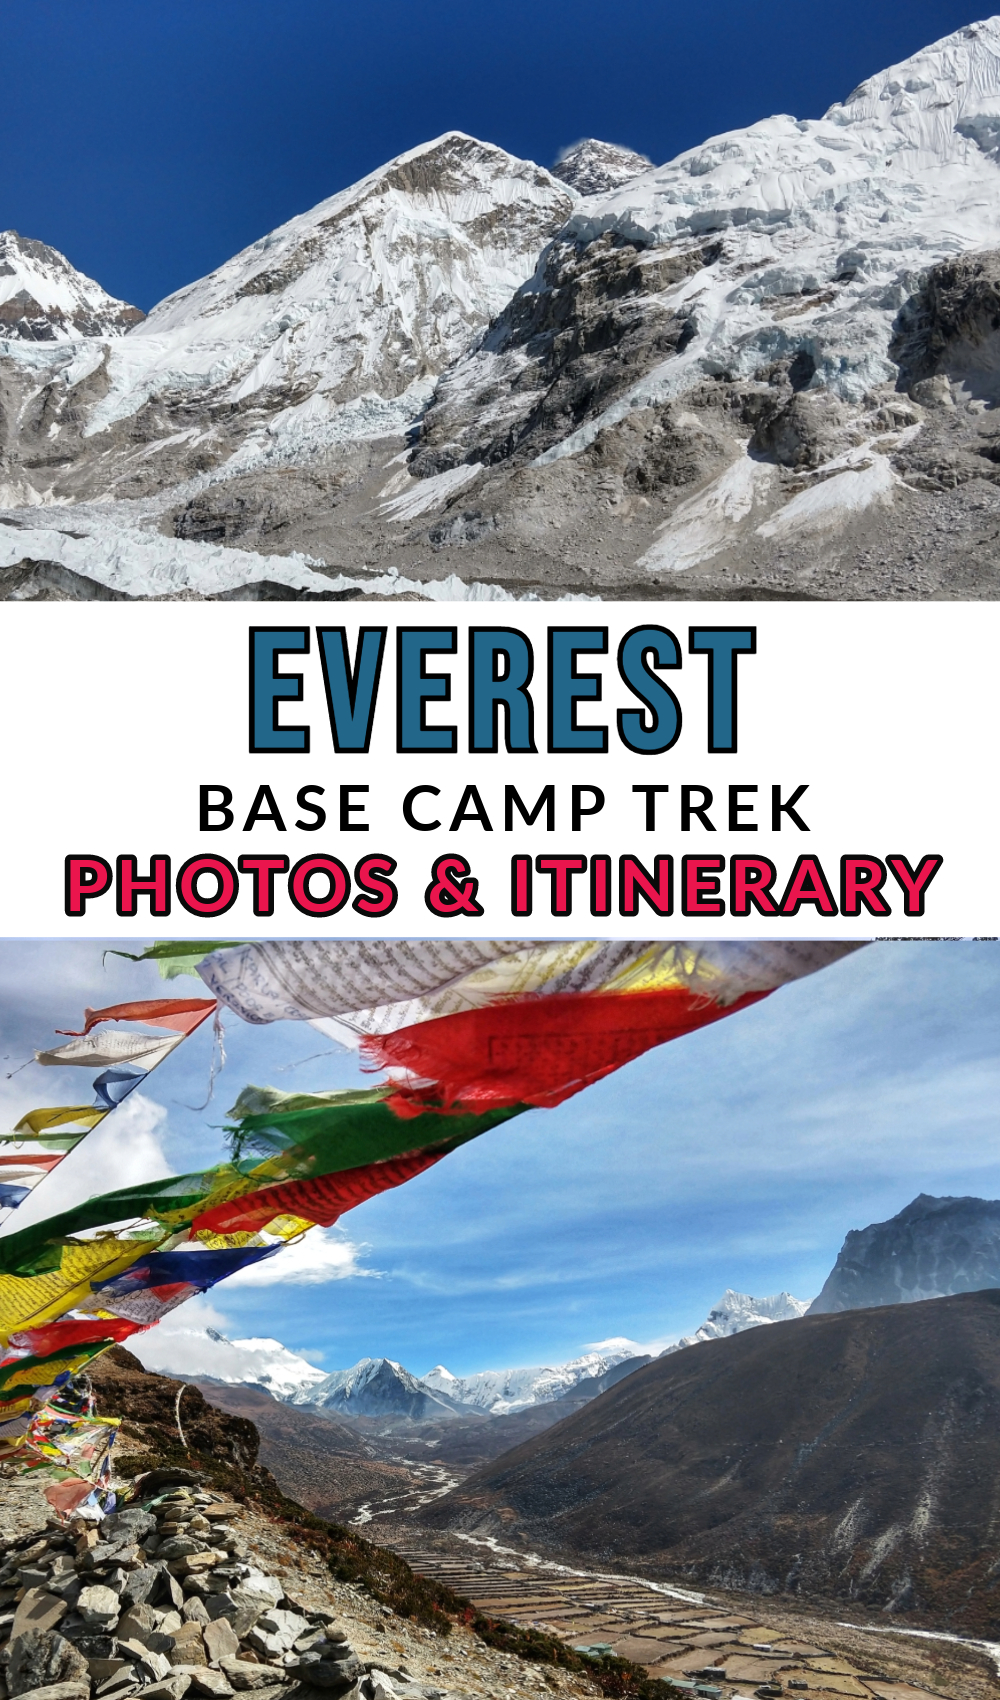 Everest Base Camp trek photos and itinerary